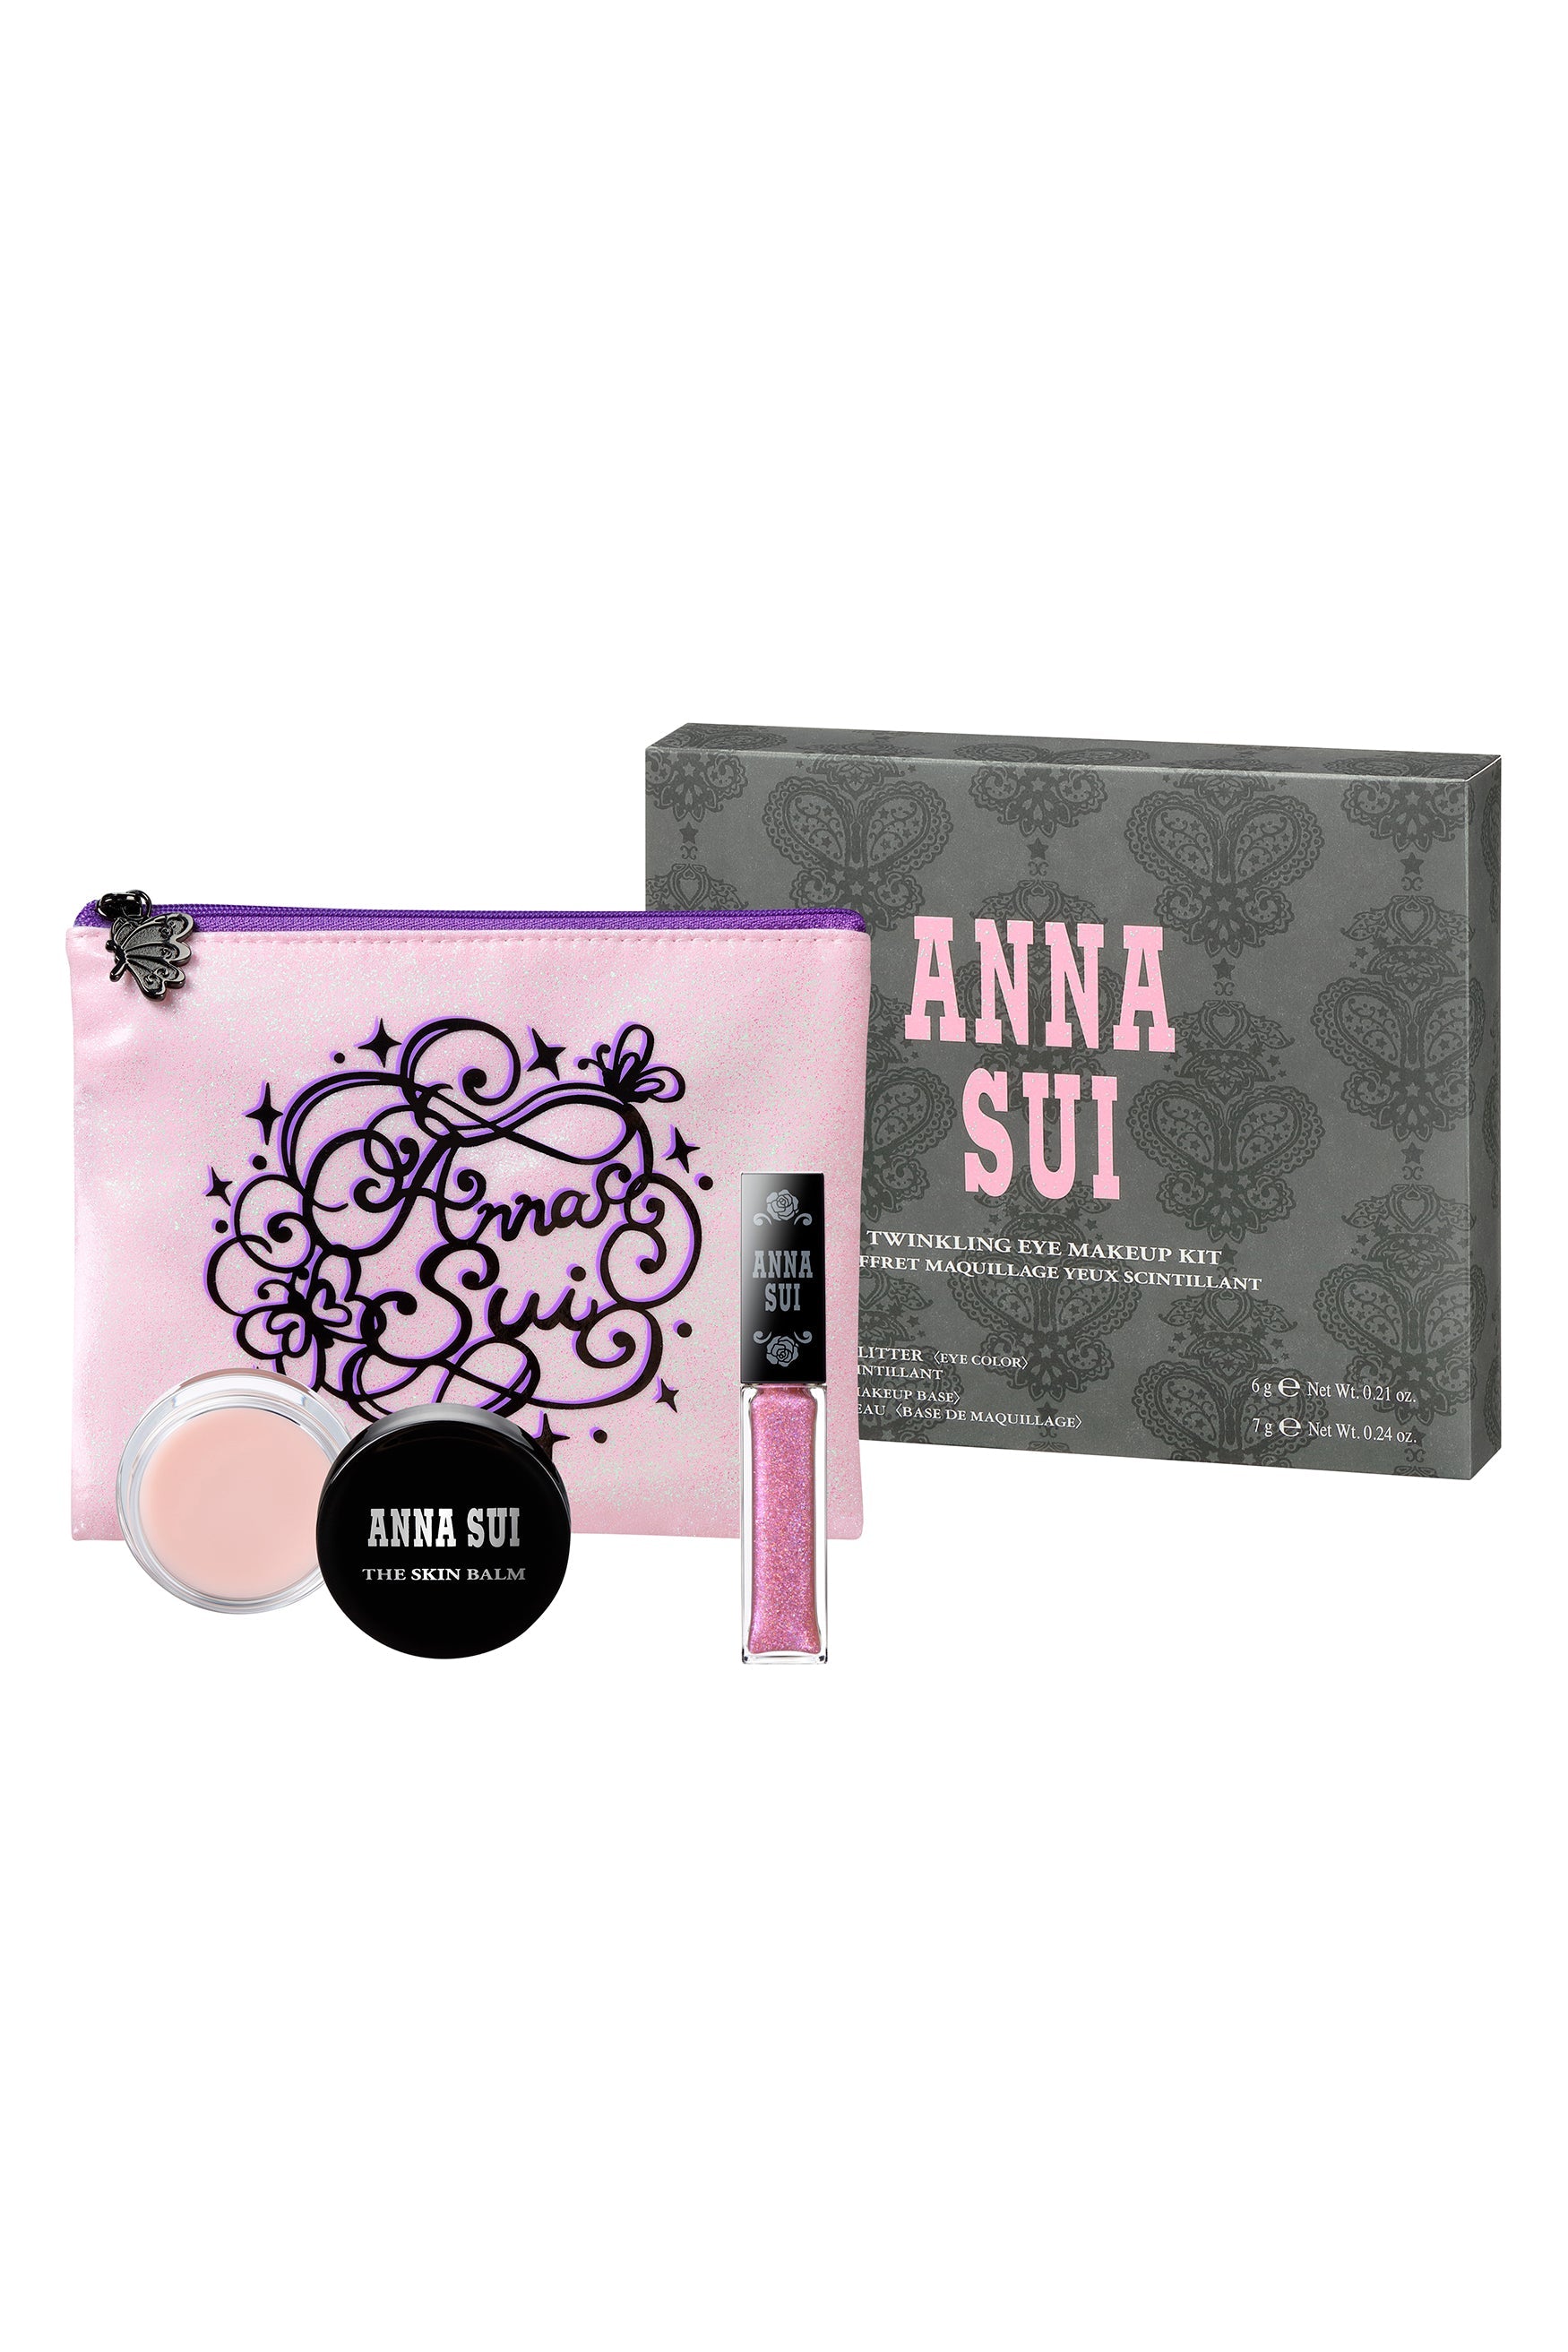 Twinkling Eye Makeup grey box, pink A.S. label, pink pouch, PINK PARADE Eye Glitter